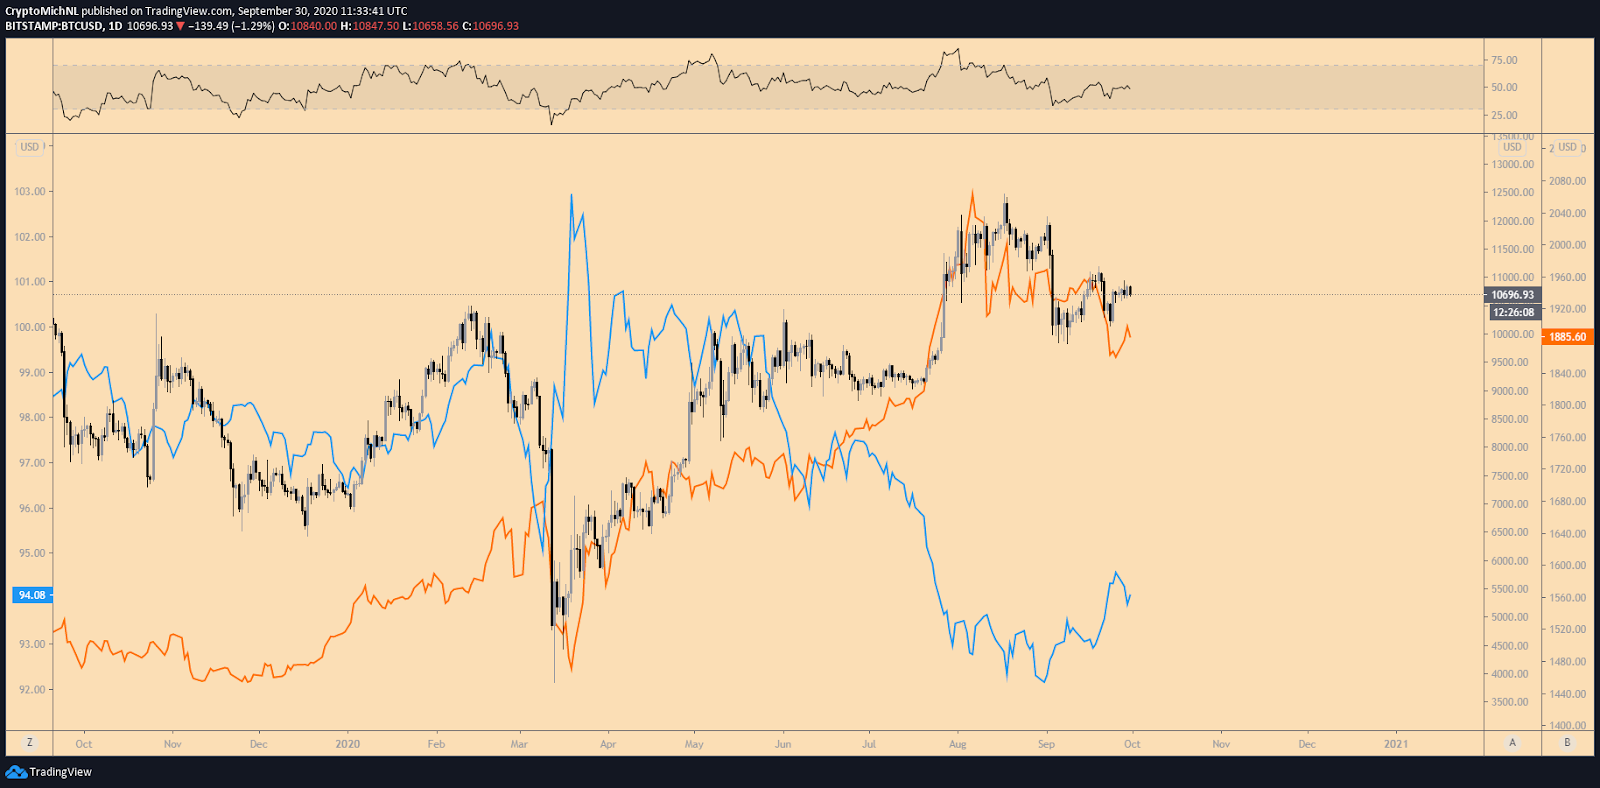 BTC/USD vs. Gold vs. DXY 1-day chart. Source: TradingView